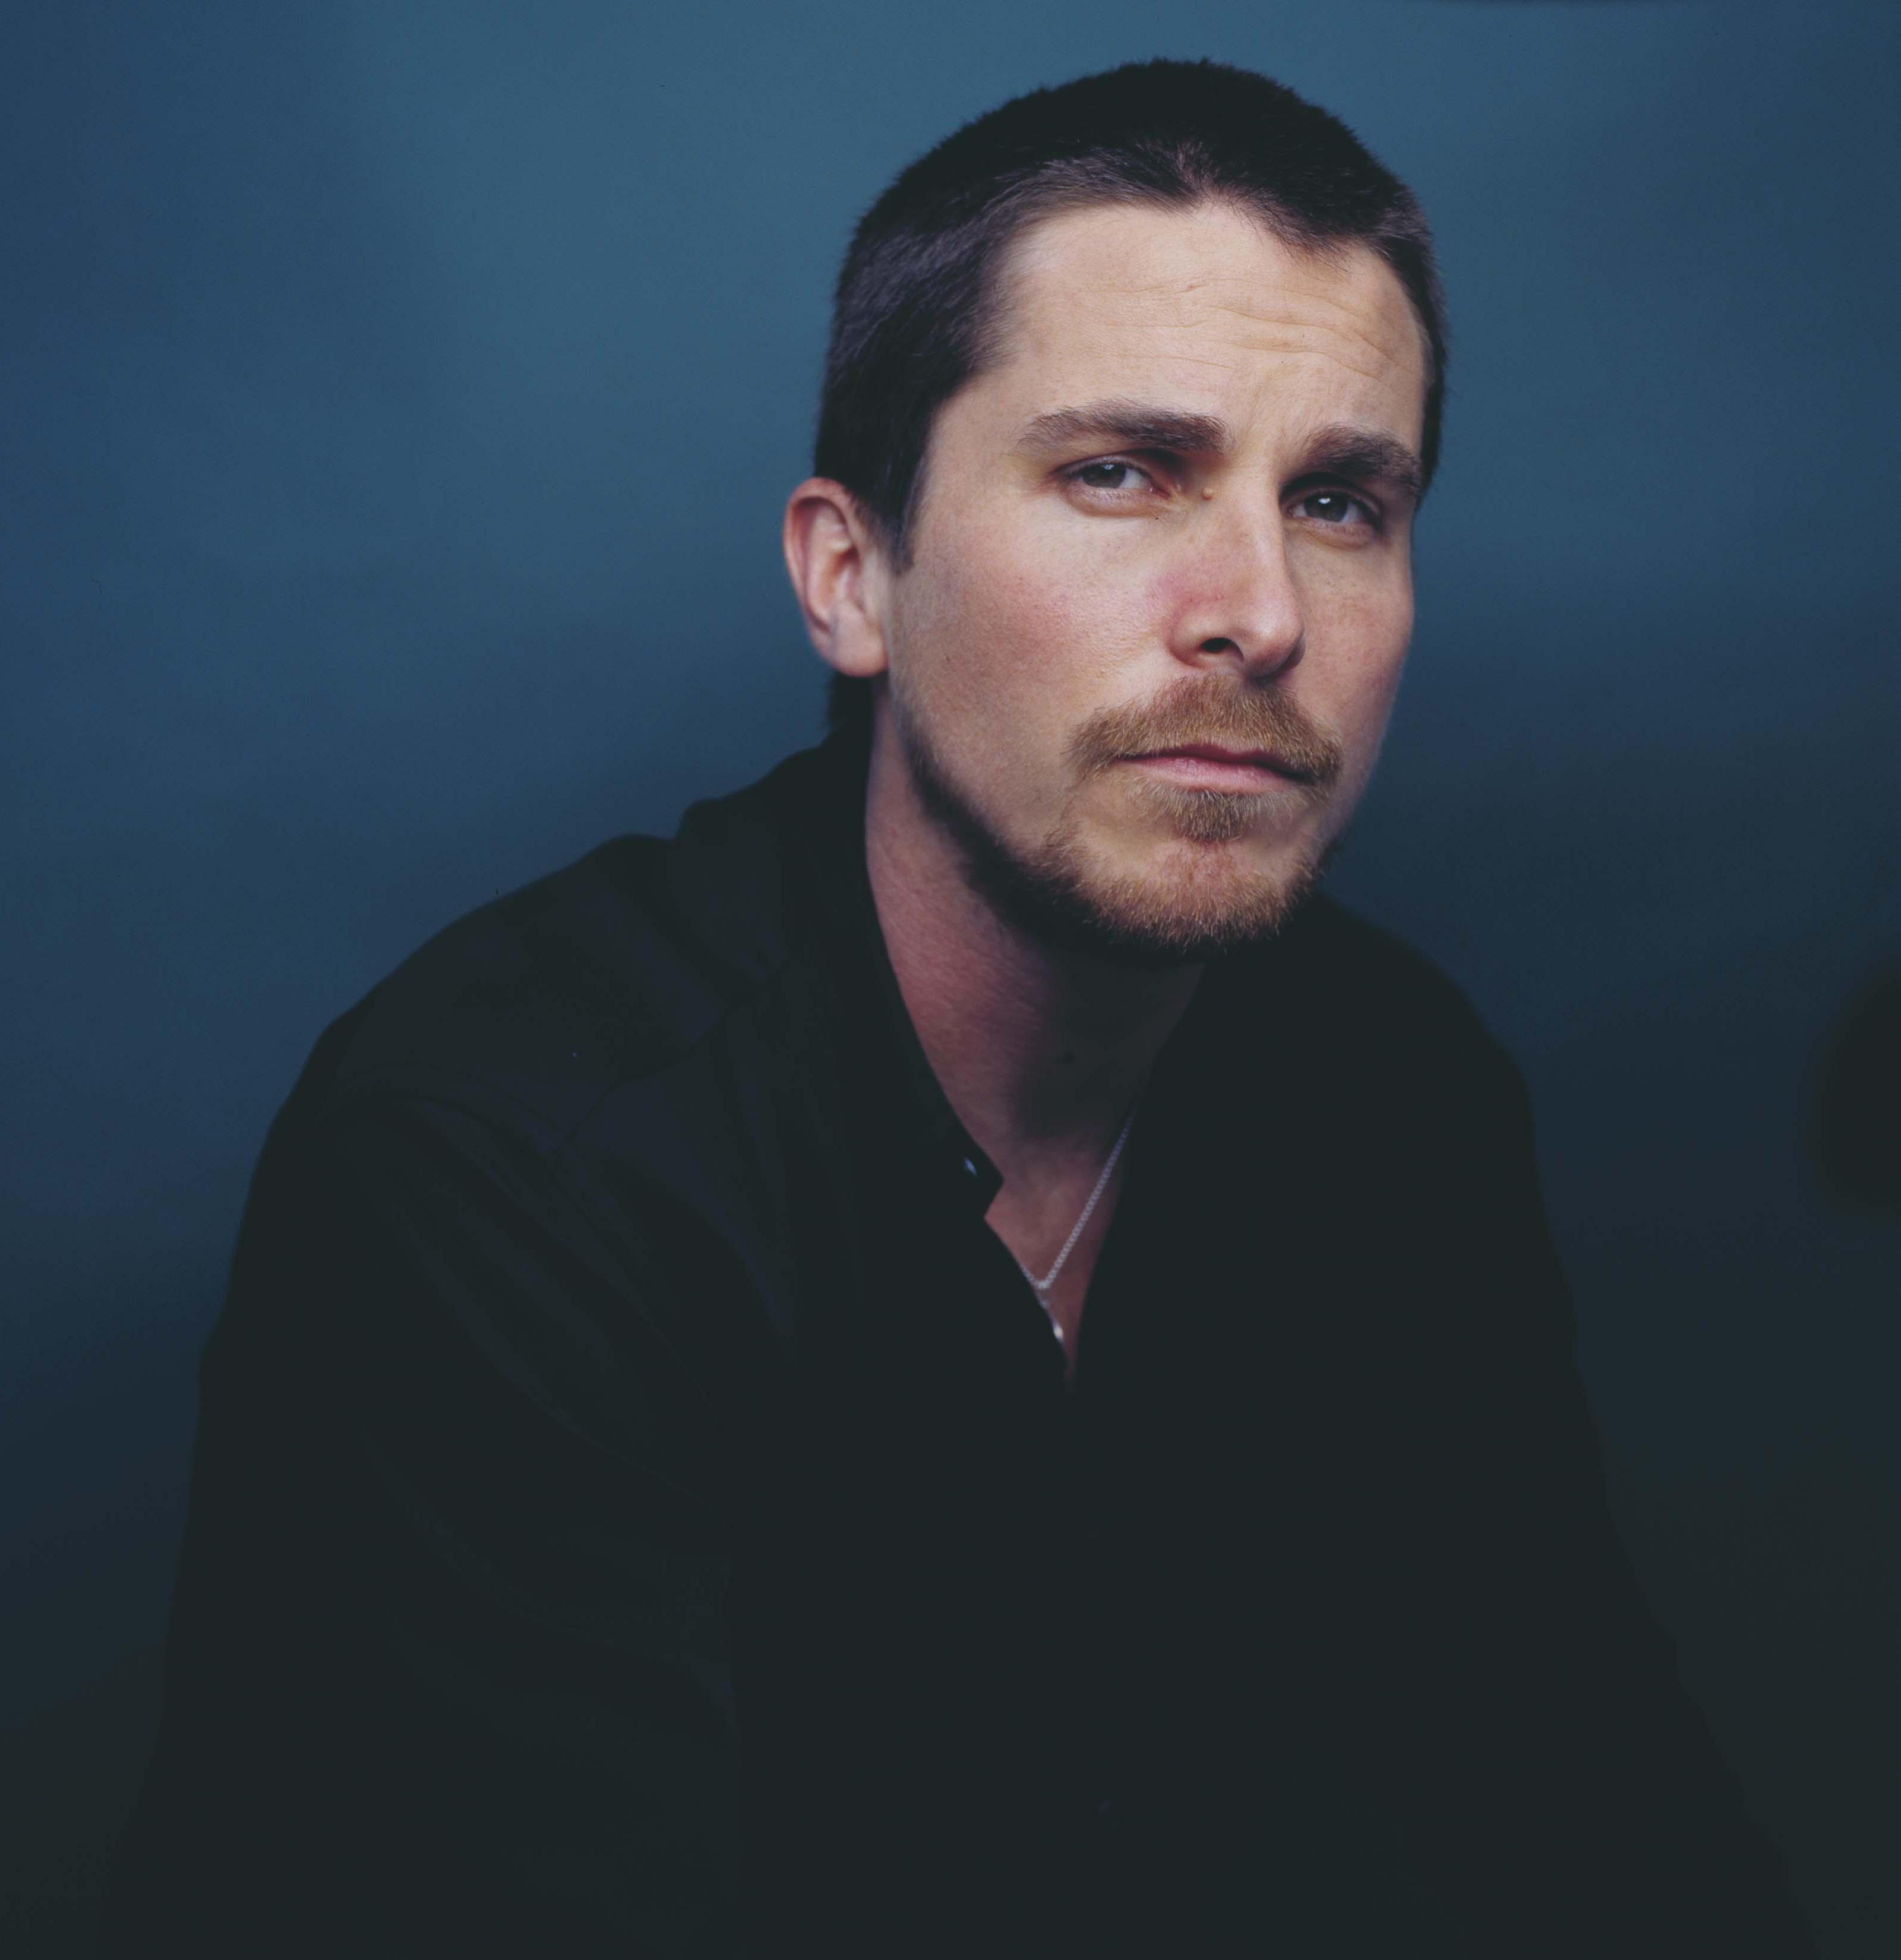 Christian Bale wallpaper №38859.